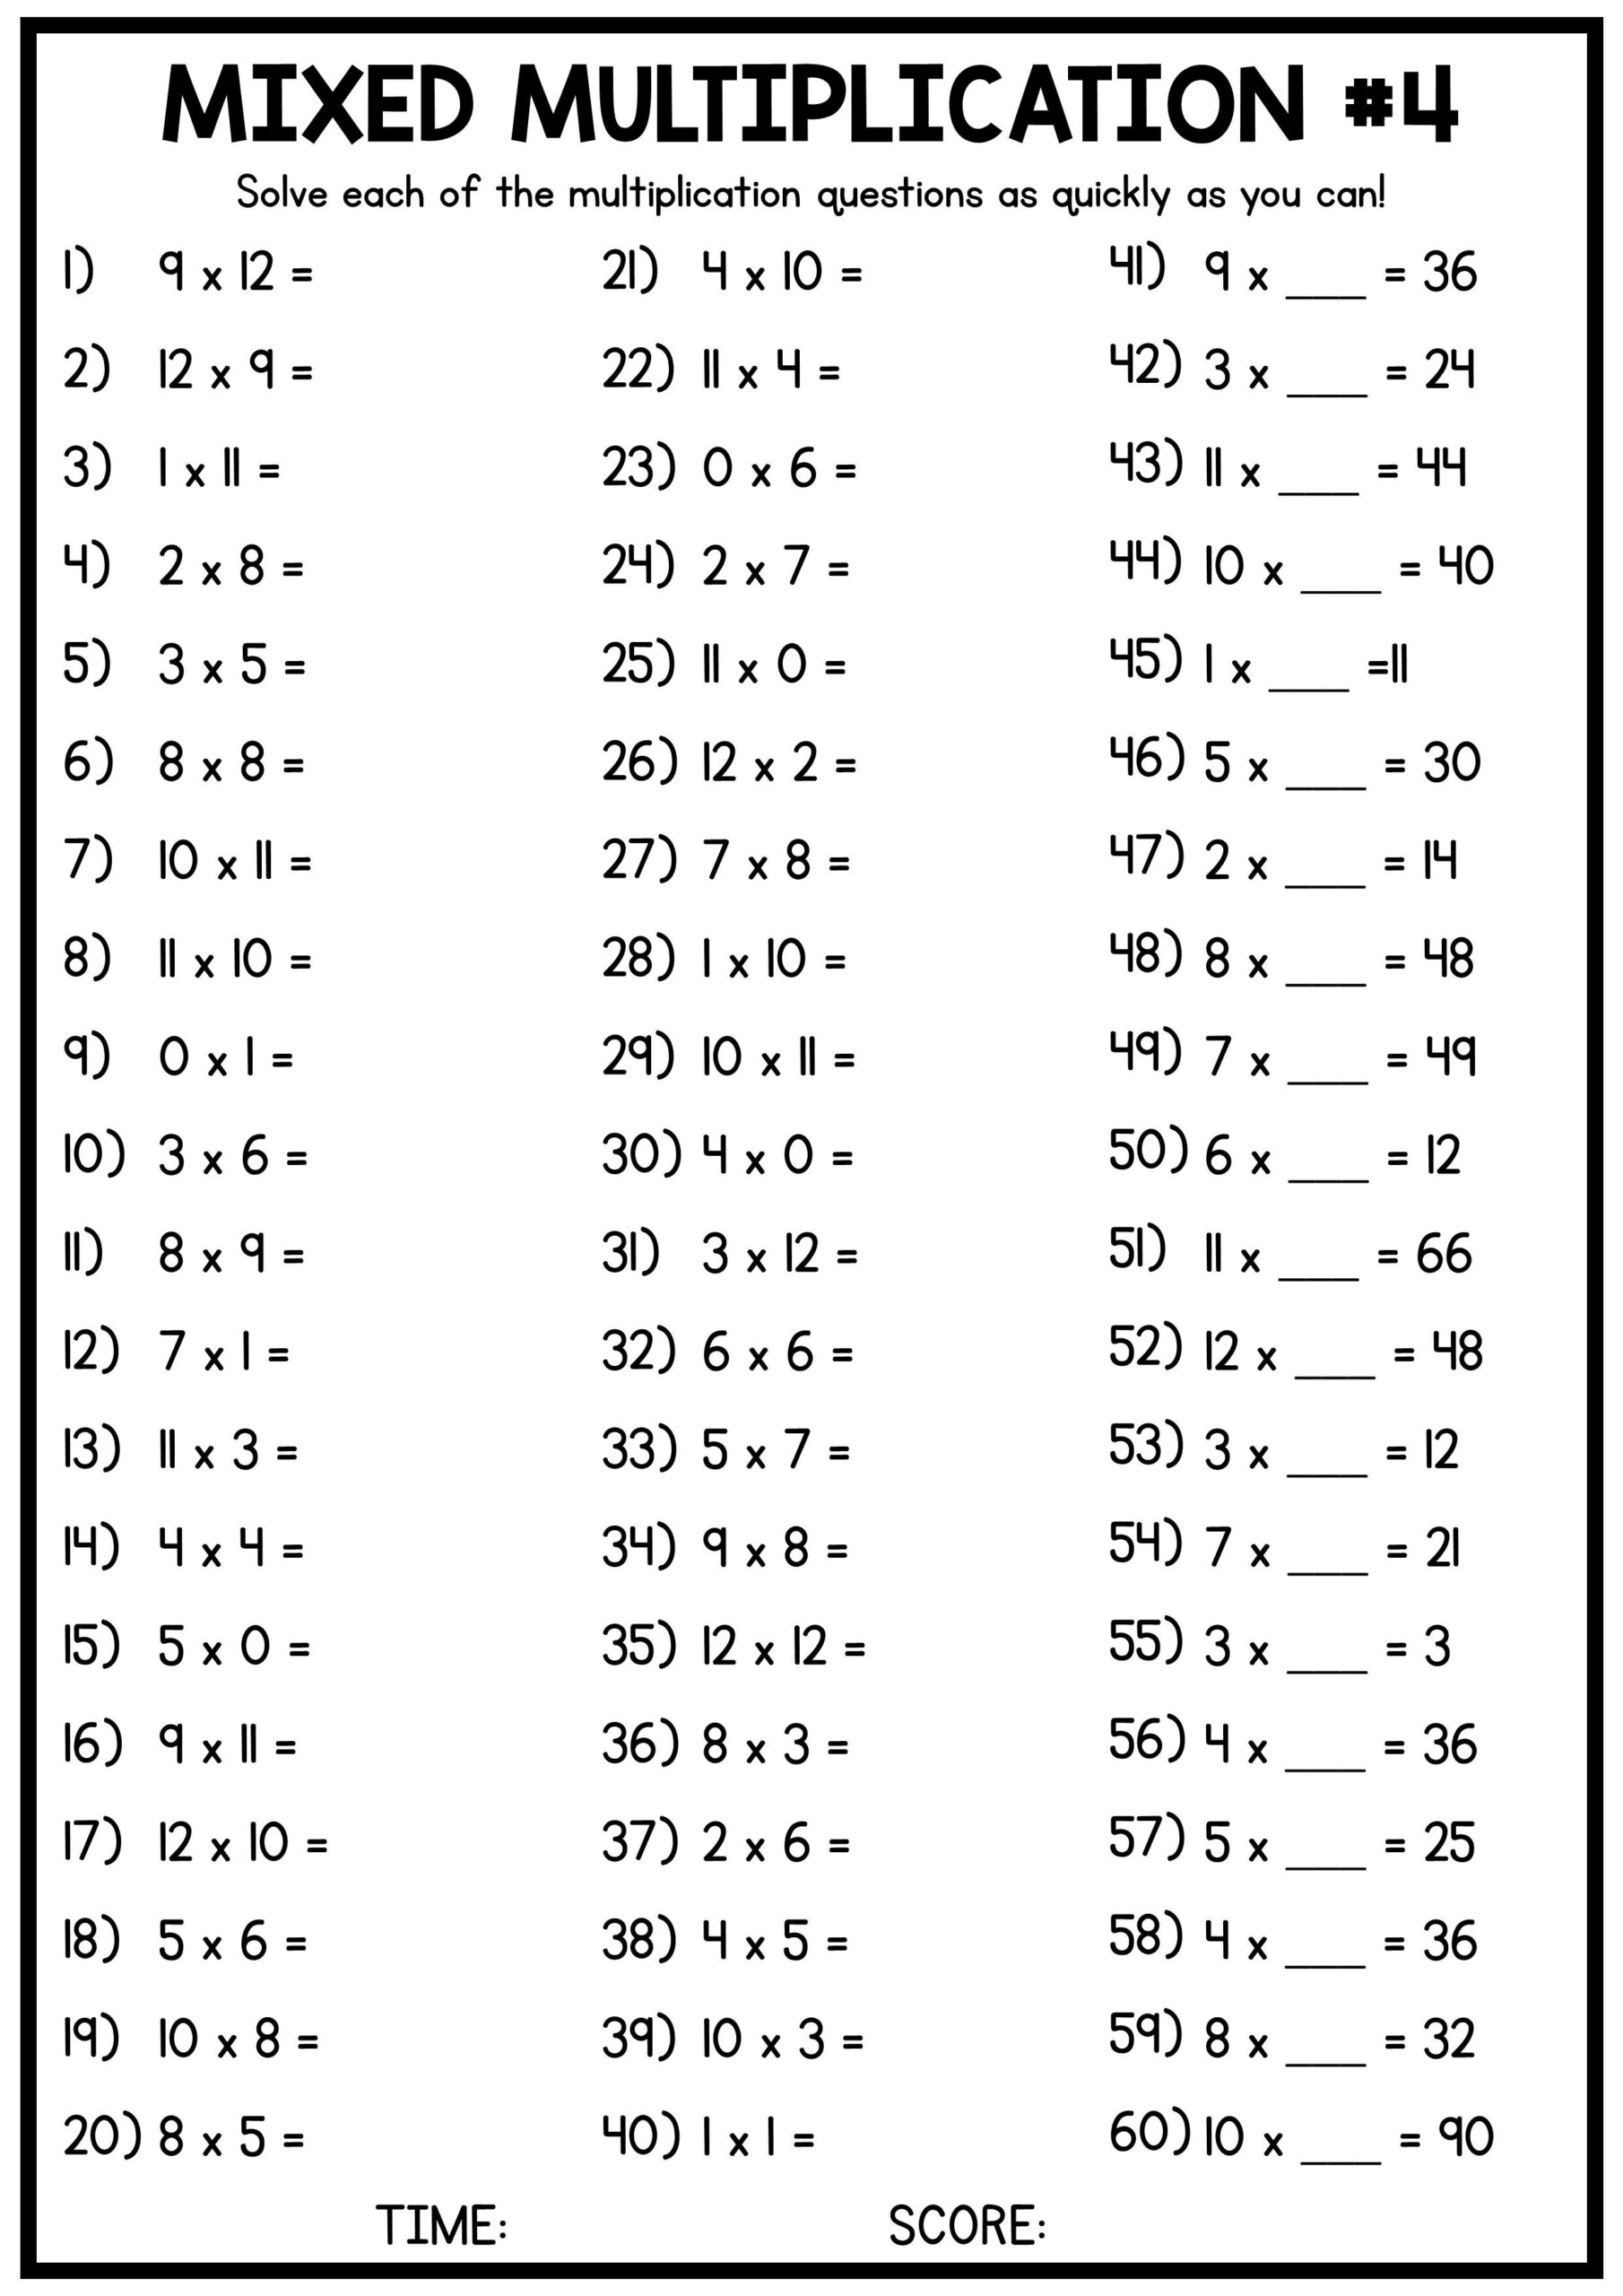 printable-multiplication-equation-cards